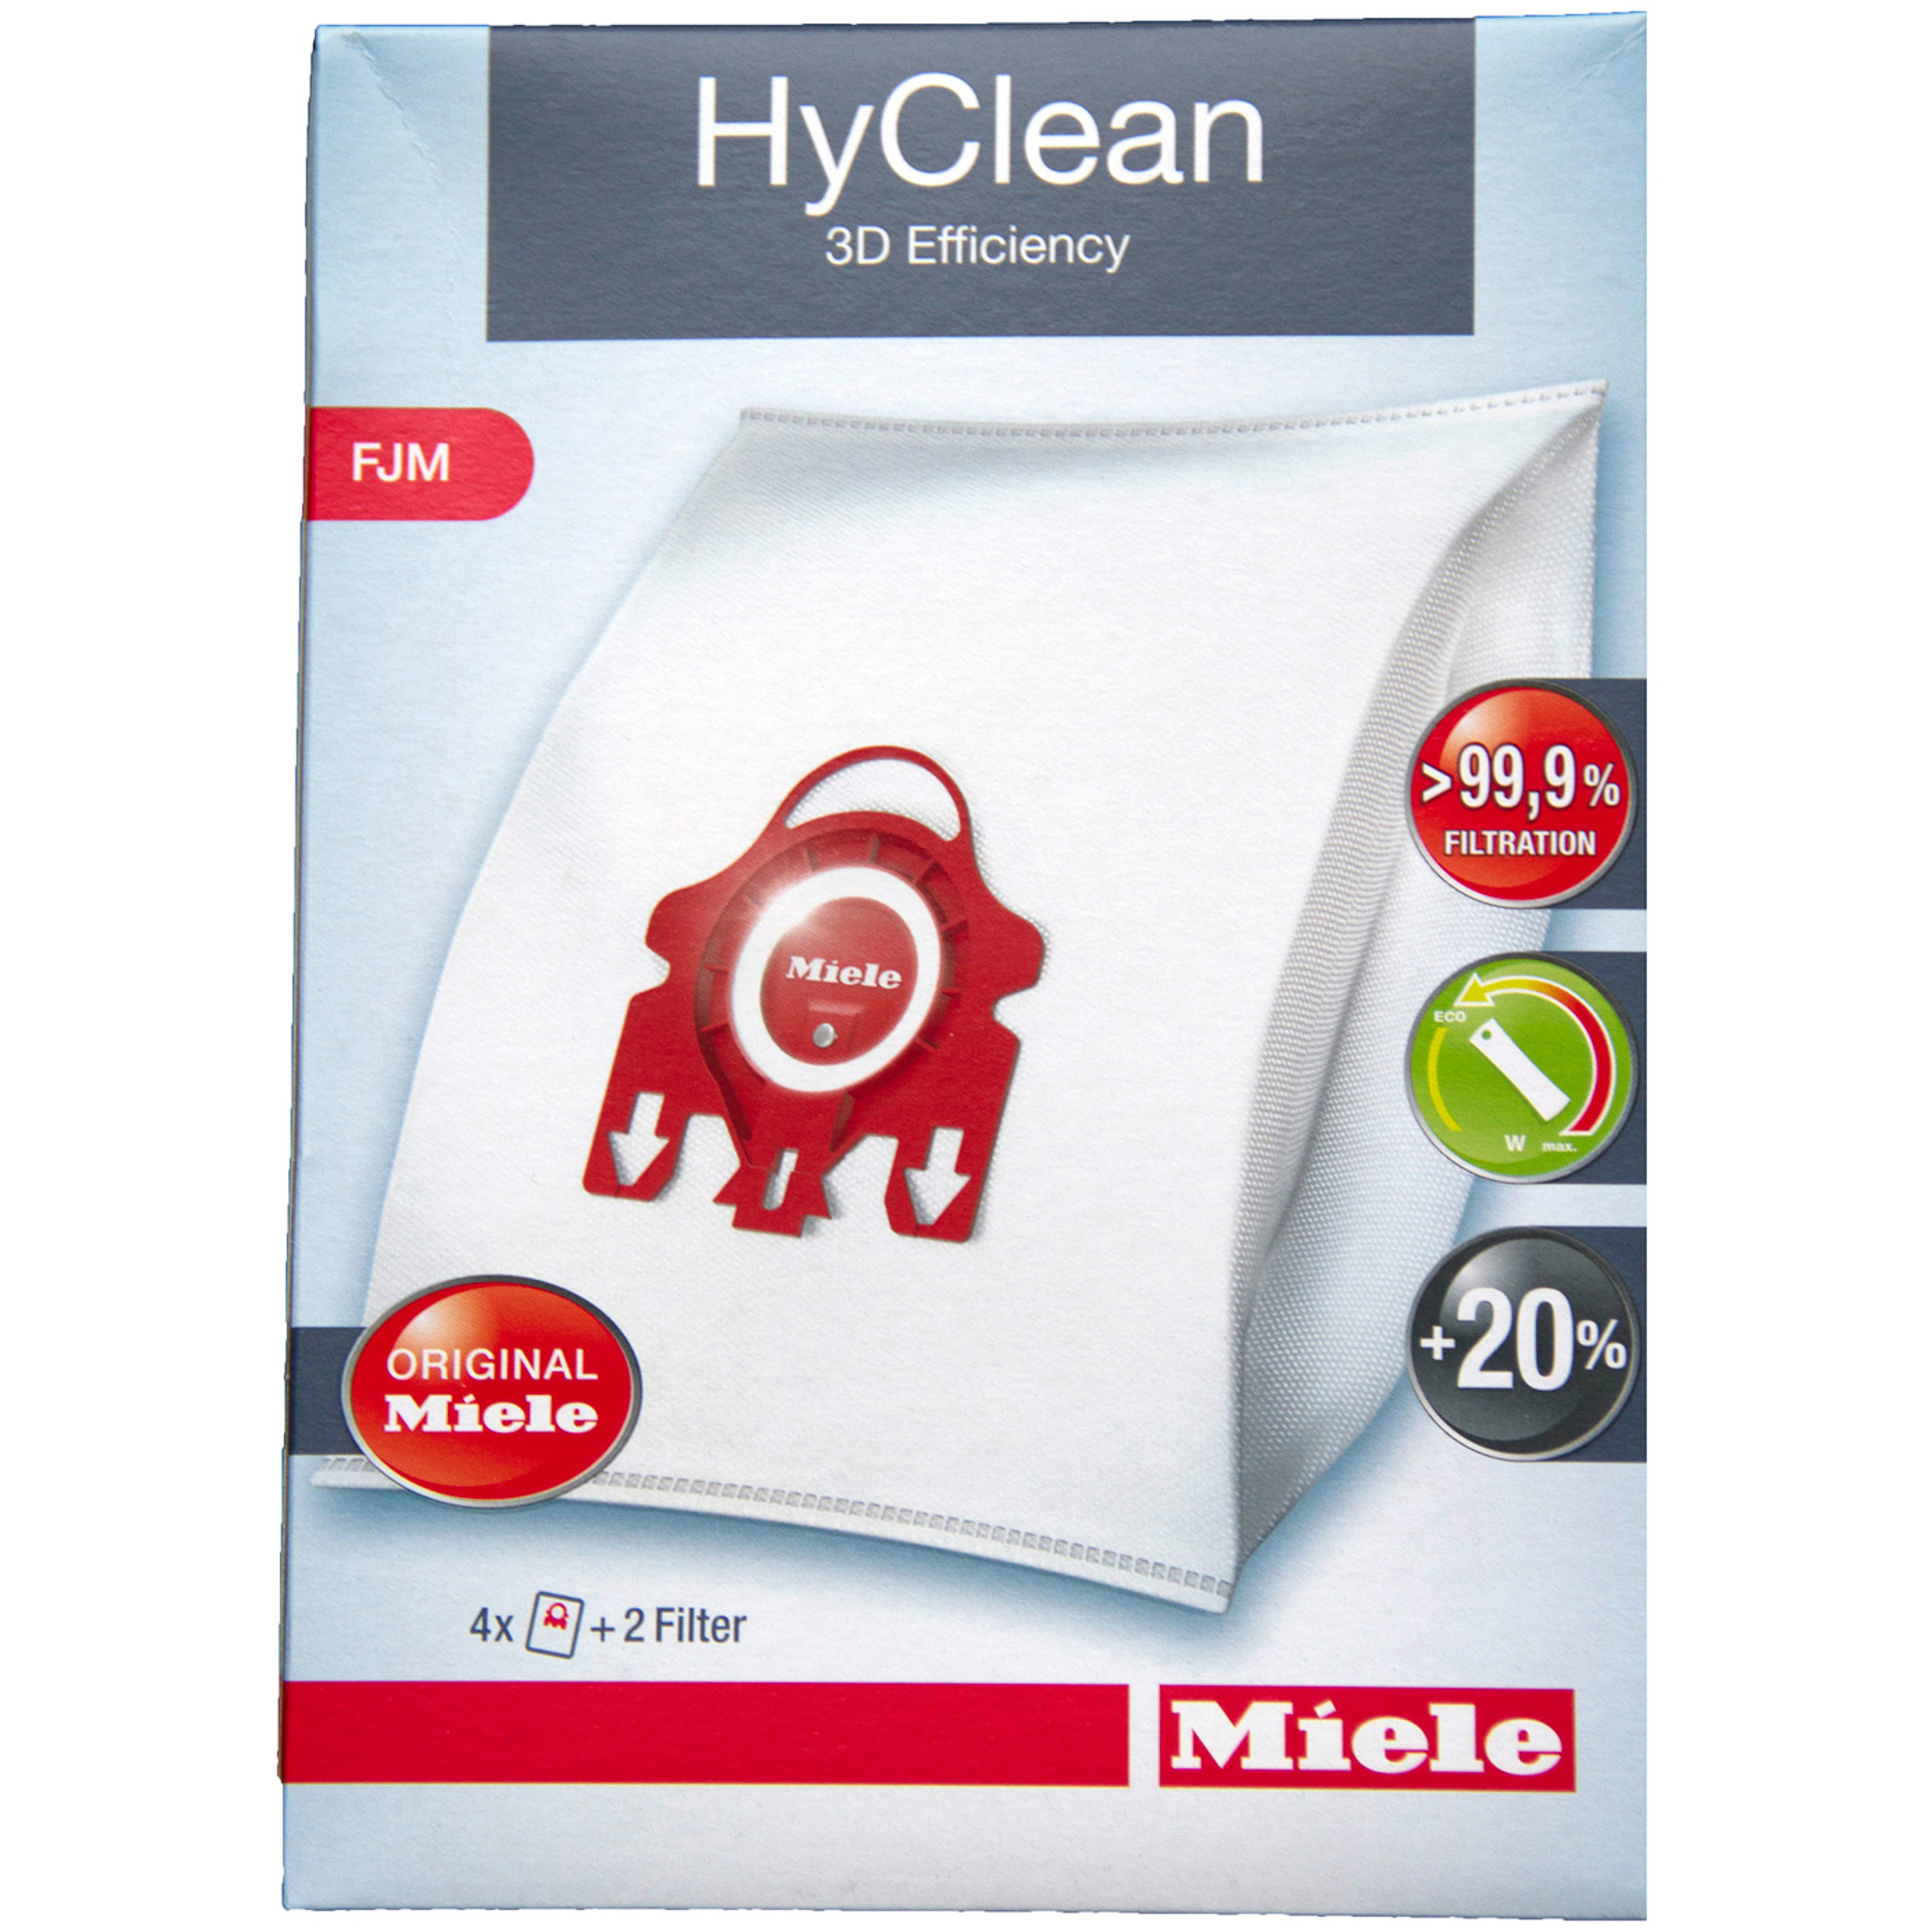 Пылесборник Miele FJM HyClean 3D Efficiency miele комплект gn xxl hyclean 3d 16 шт